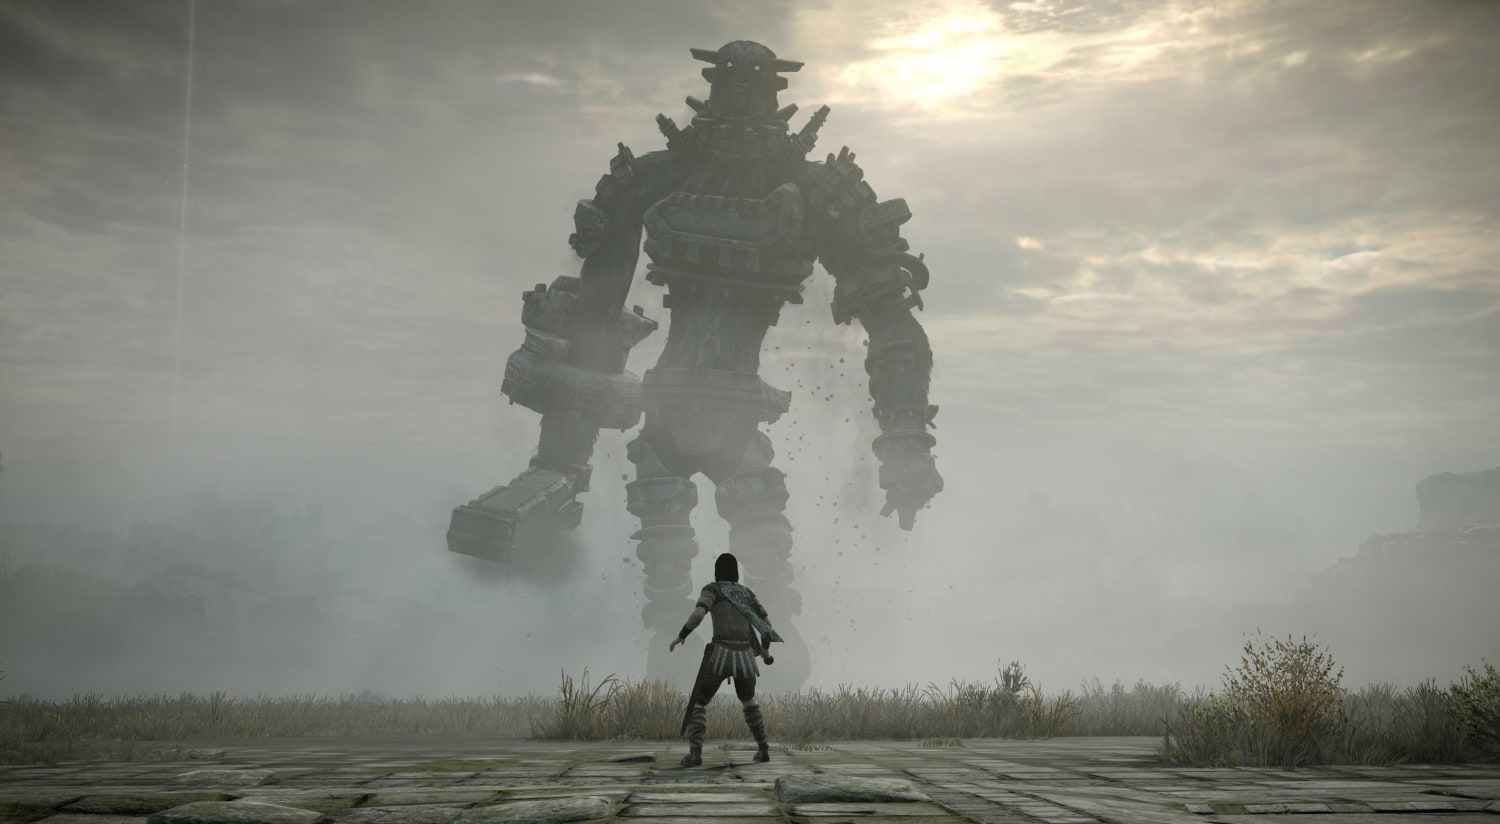 Okami and Shadow of the Colossus